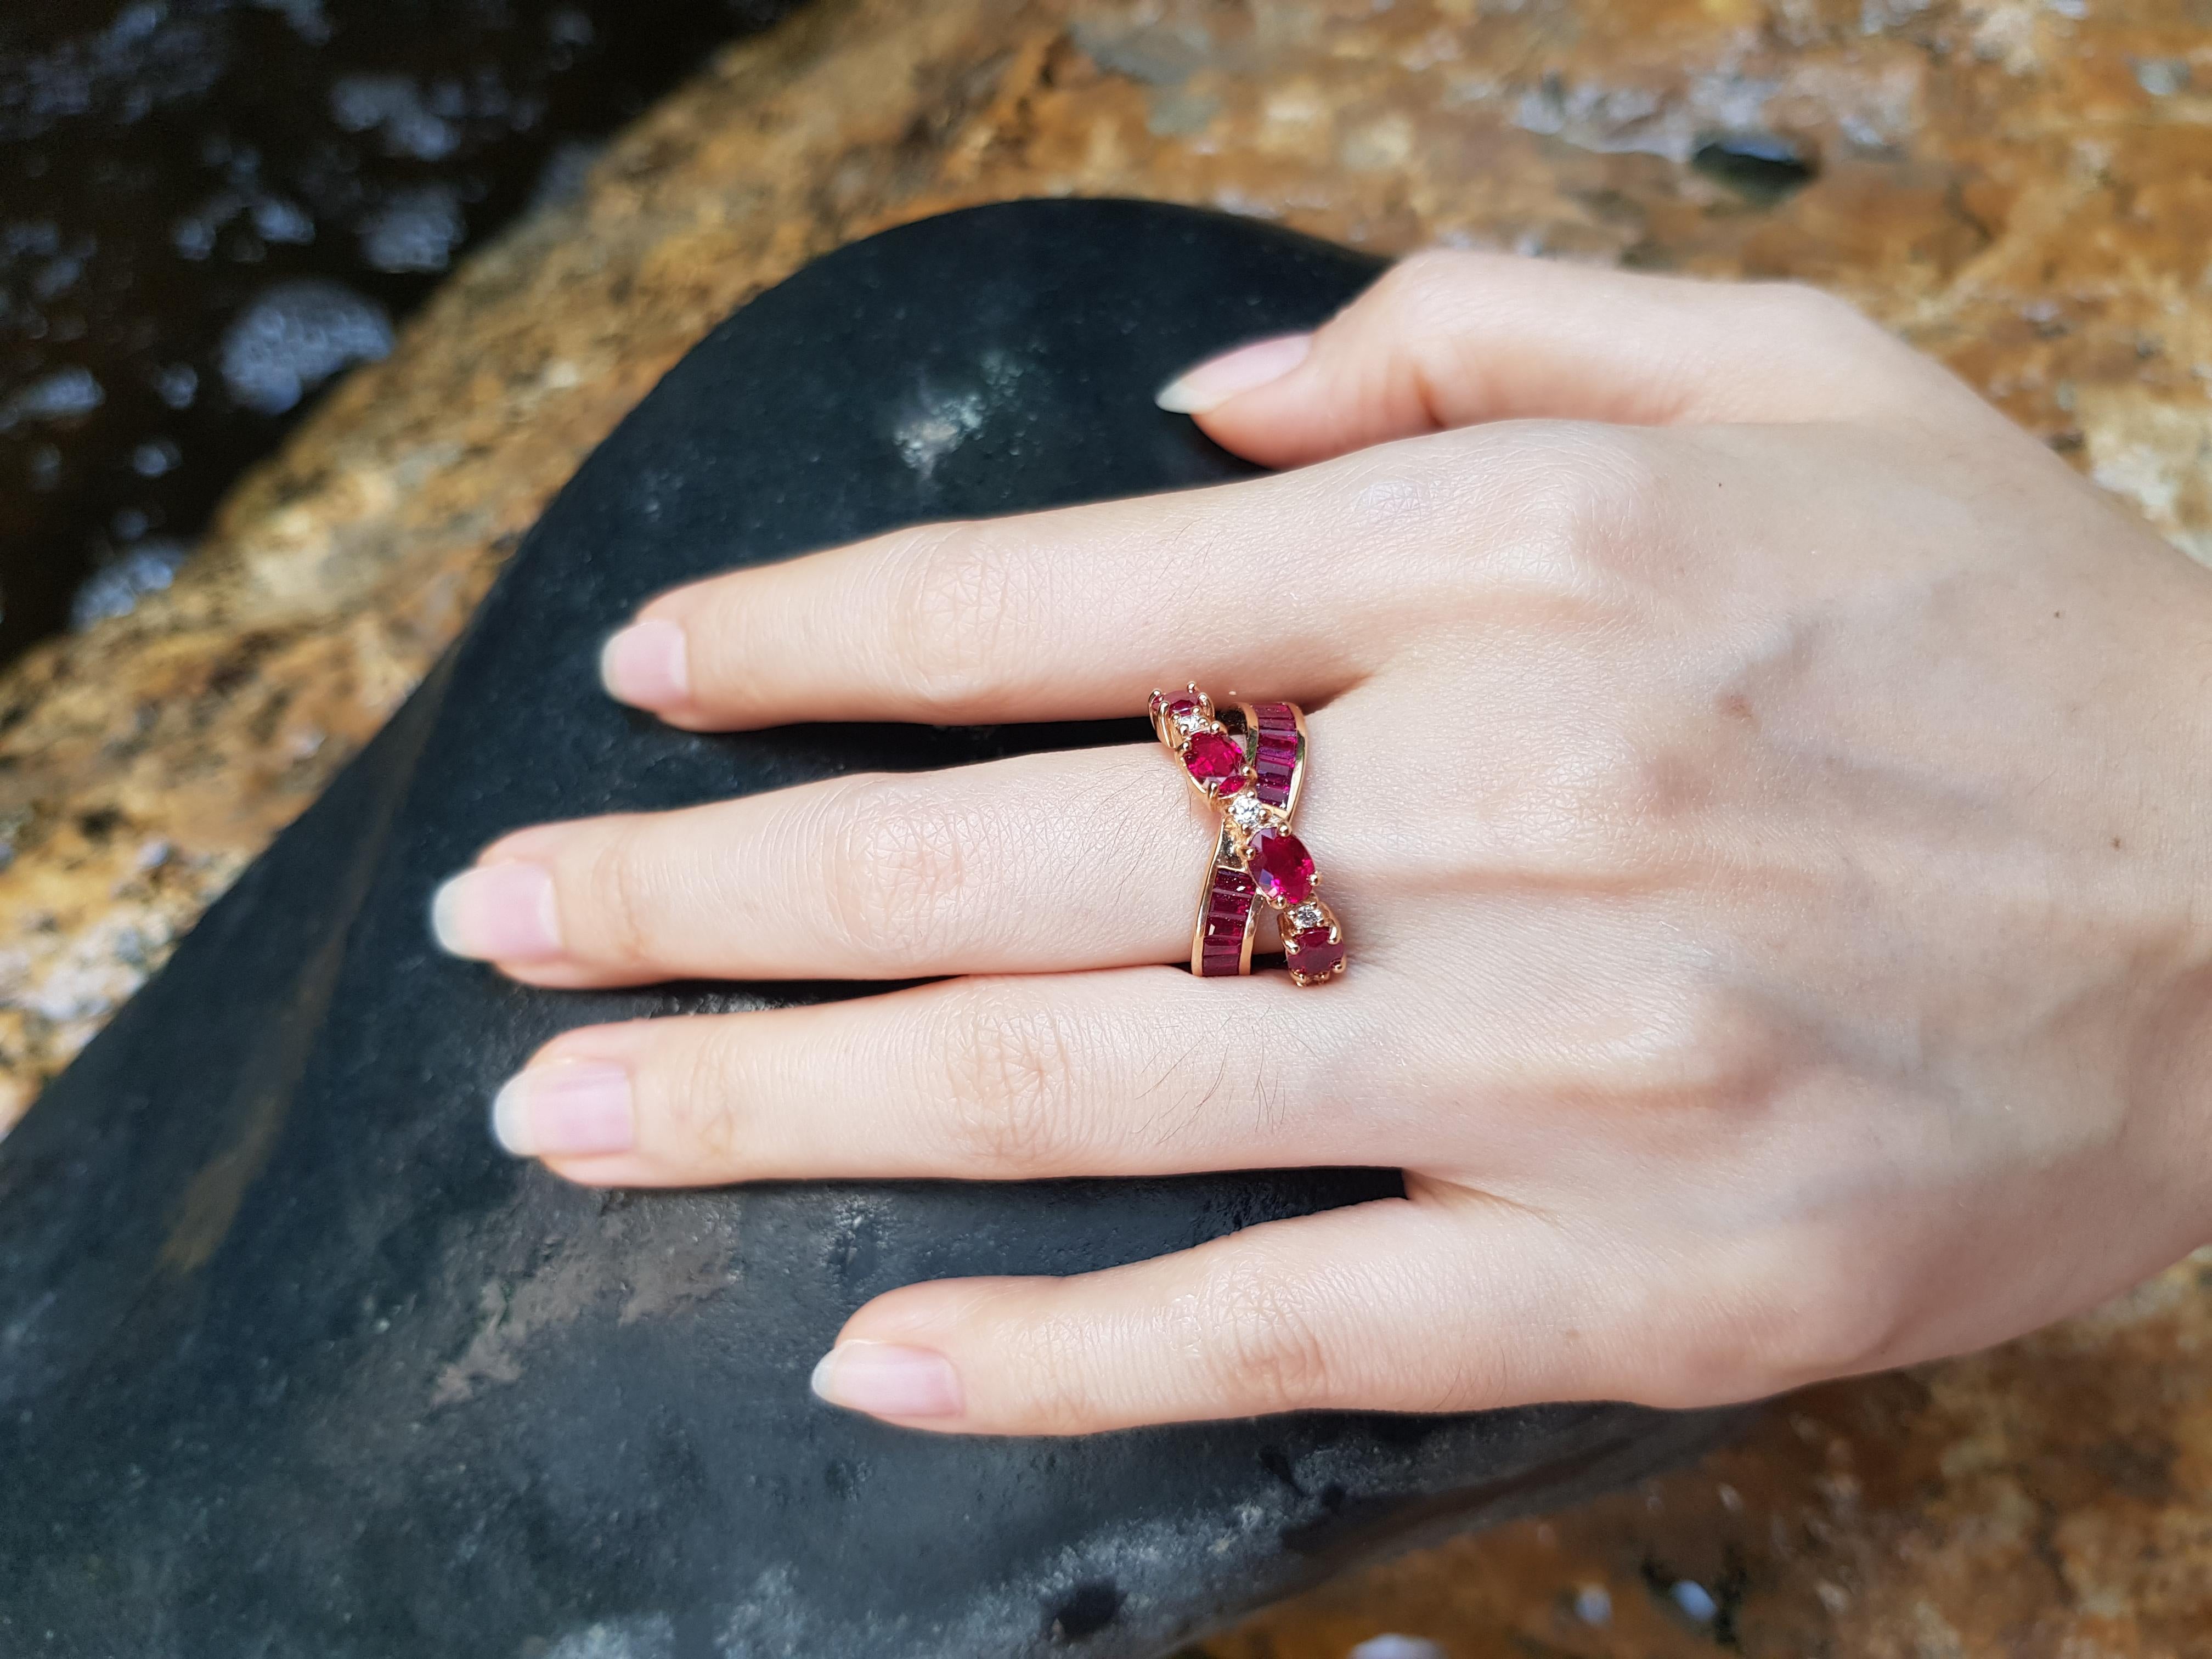 Ruby 3.77 carats with Diamond 0.10 carat Ring set in 18 Karat Rose Gold Settings

Width: 2.0 cm
Length: 1.0 cm 
Ring Size: 55

